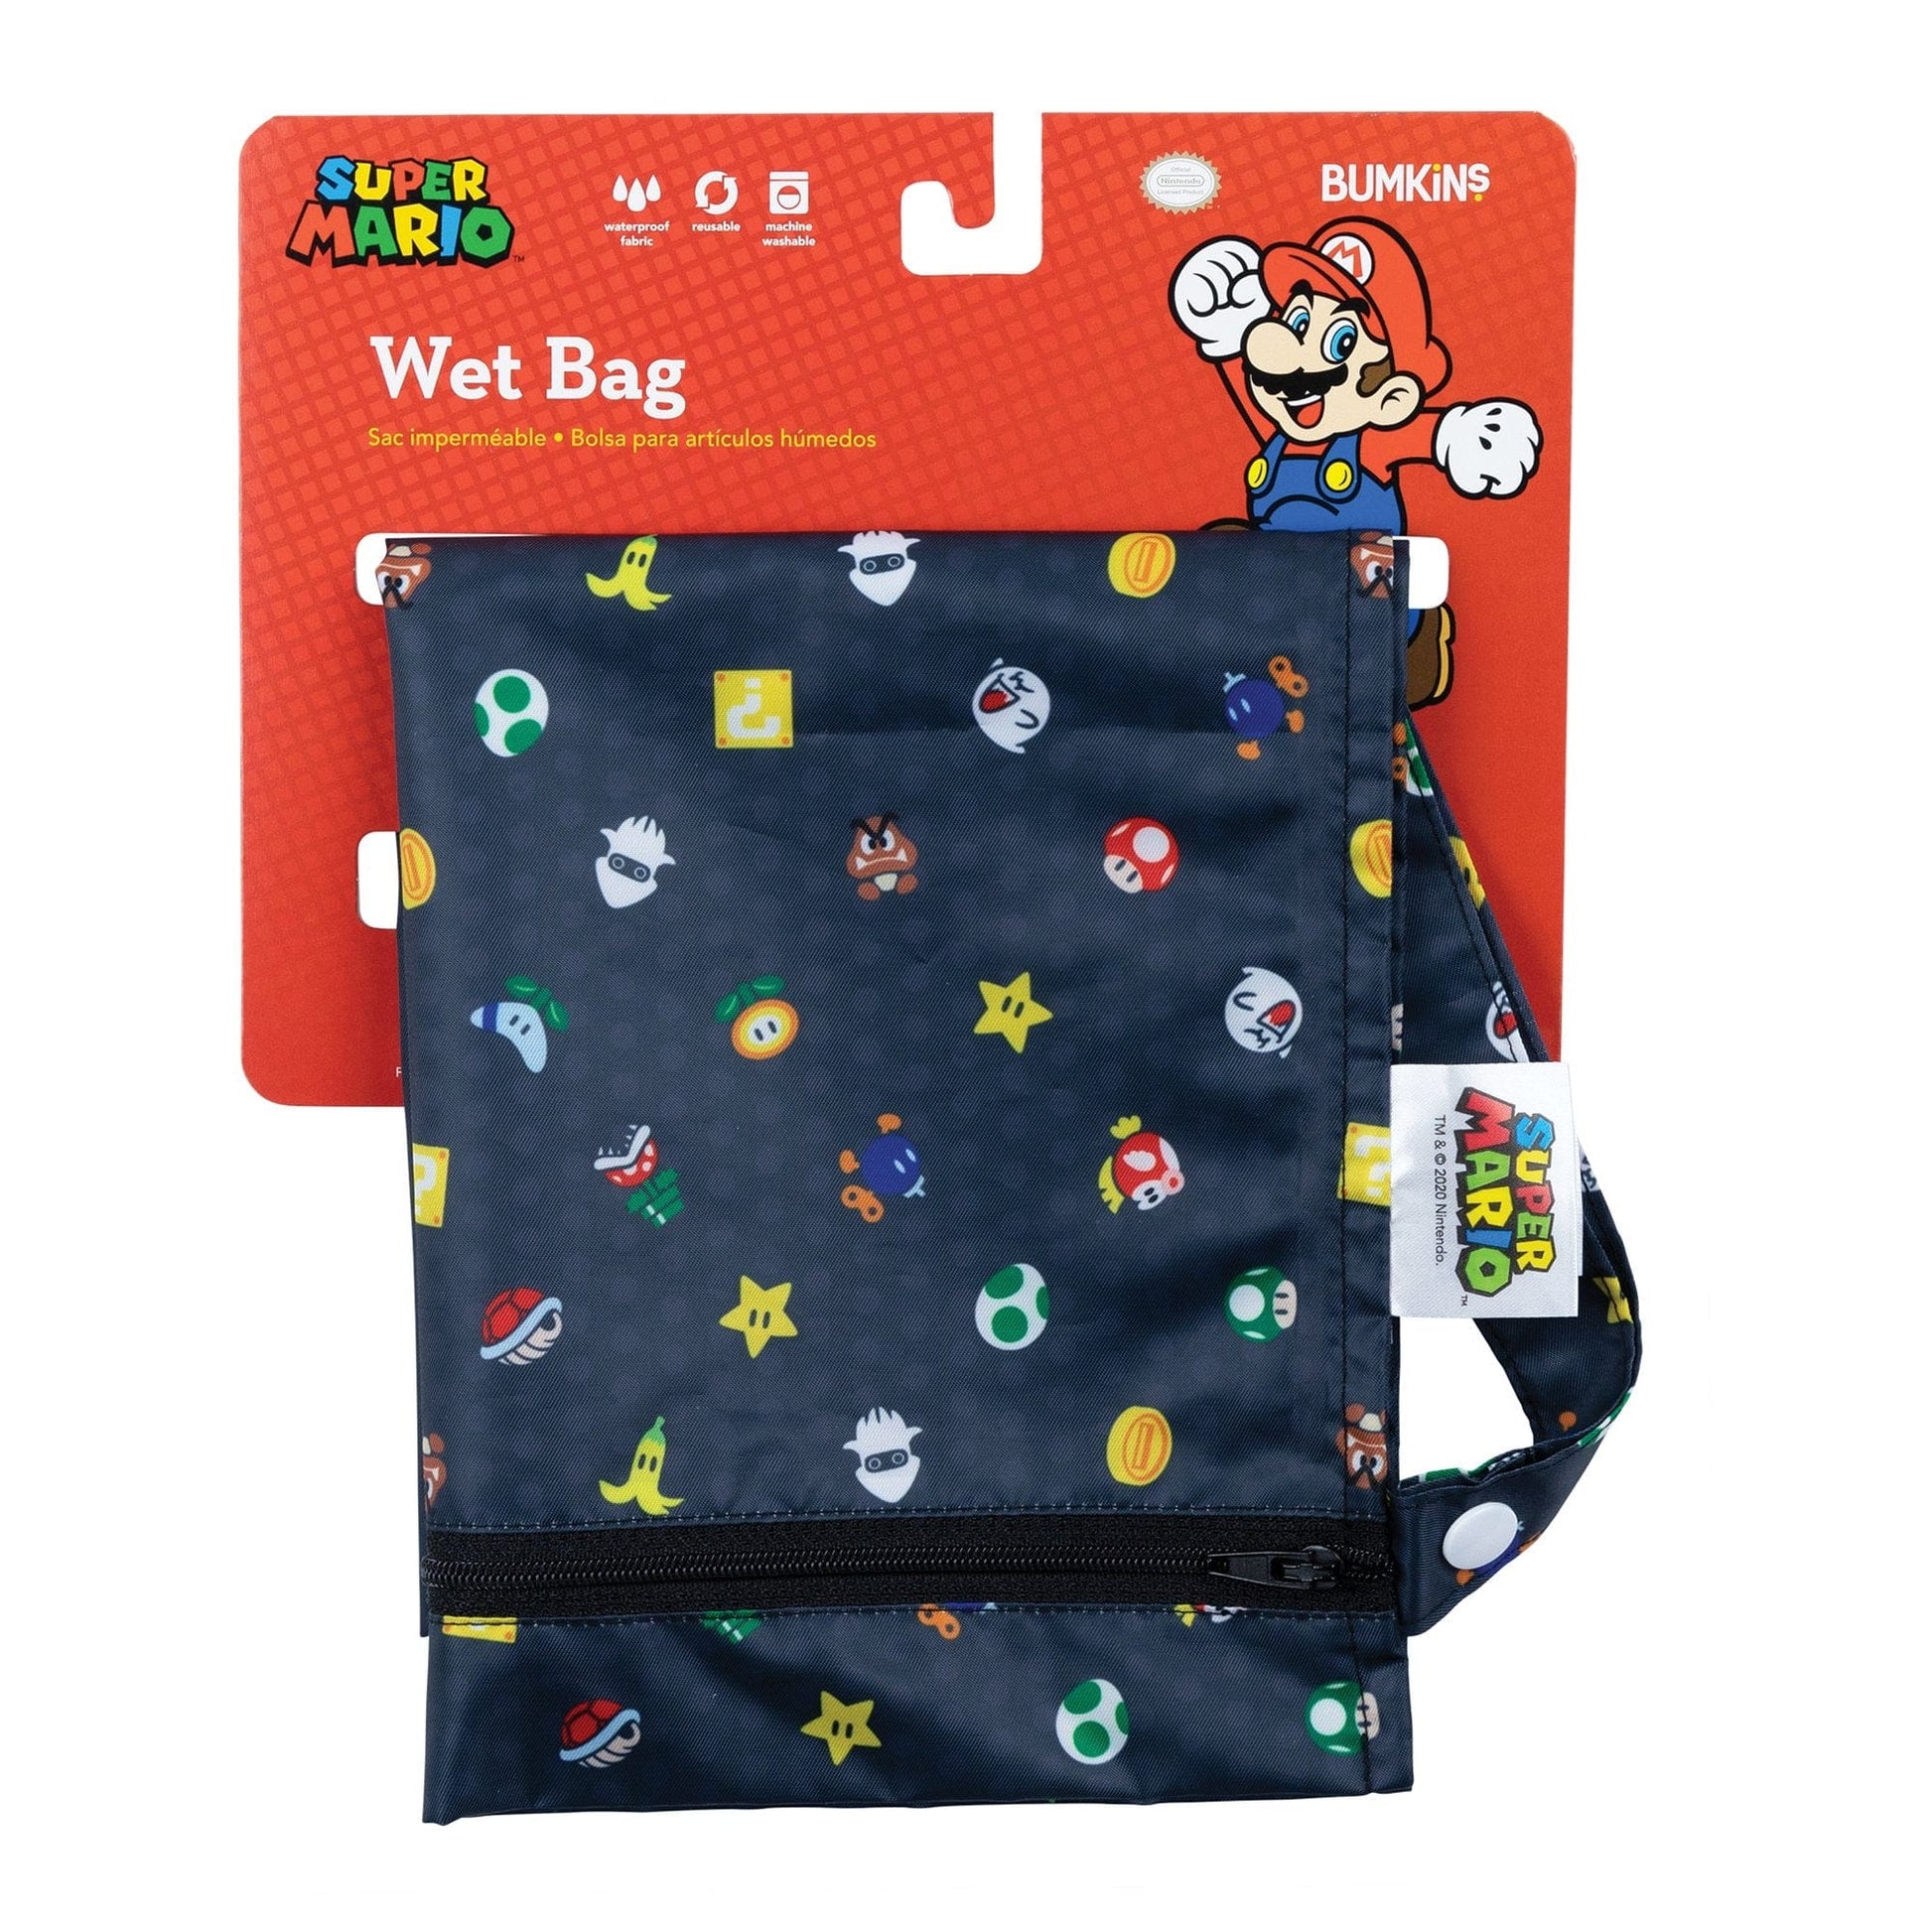 Bumkins Wet Bag -  Super Mario™ Lineup Bumkins Wet Bag -  Super Mario™ Lineup 